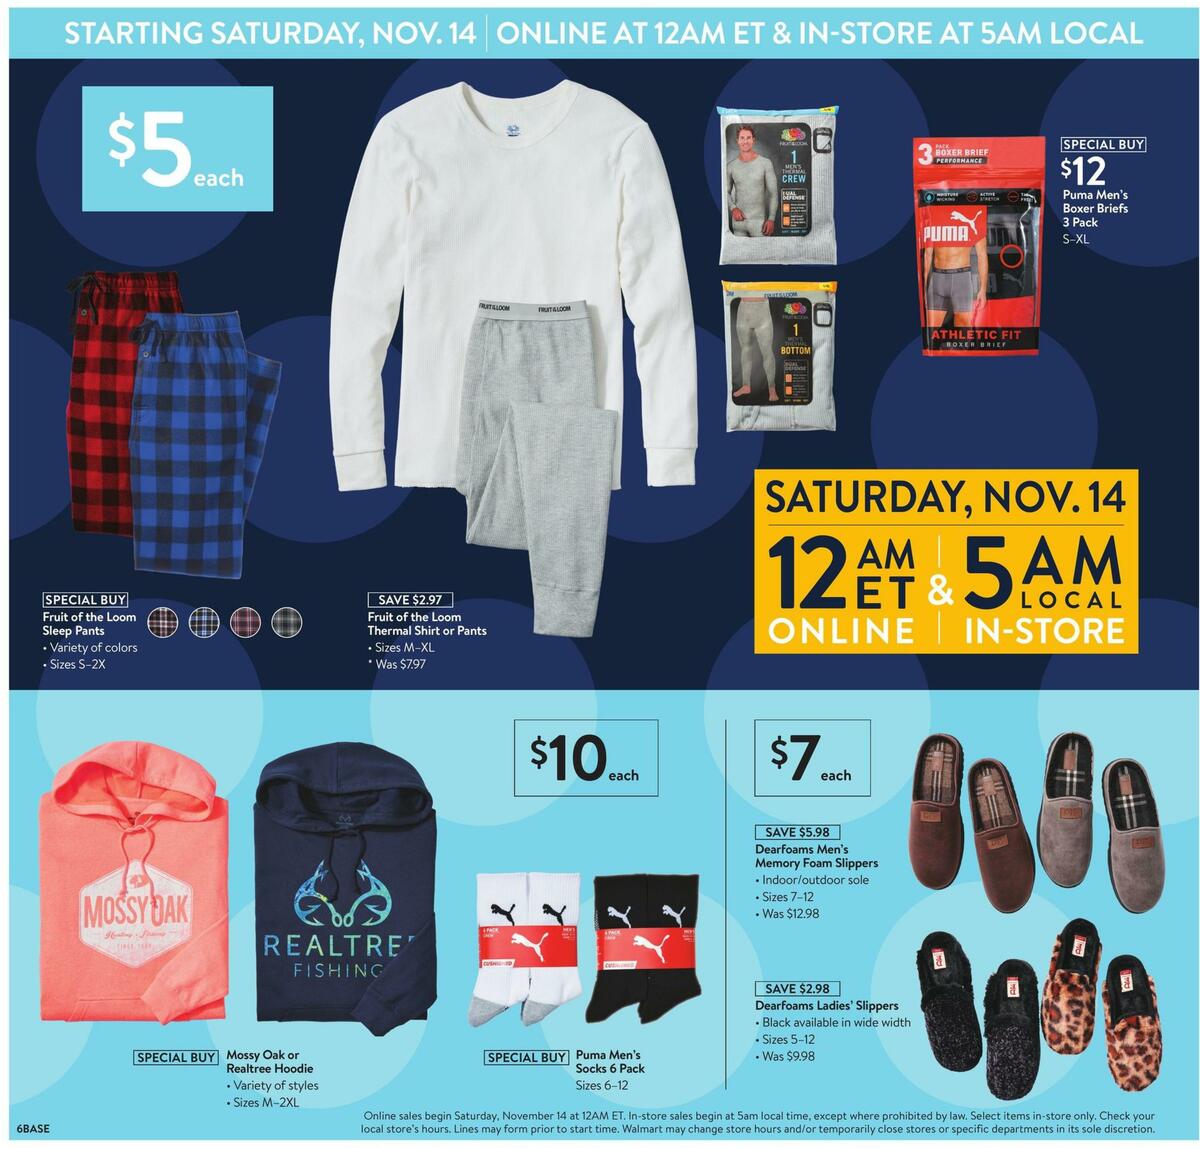 Walmart Black Friday Weekly Ad from November 11